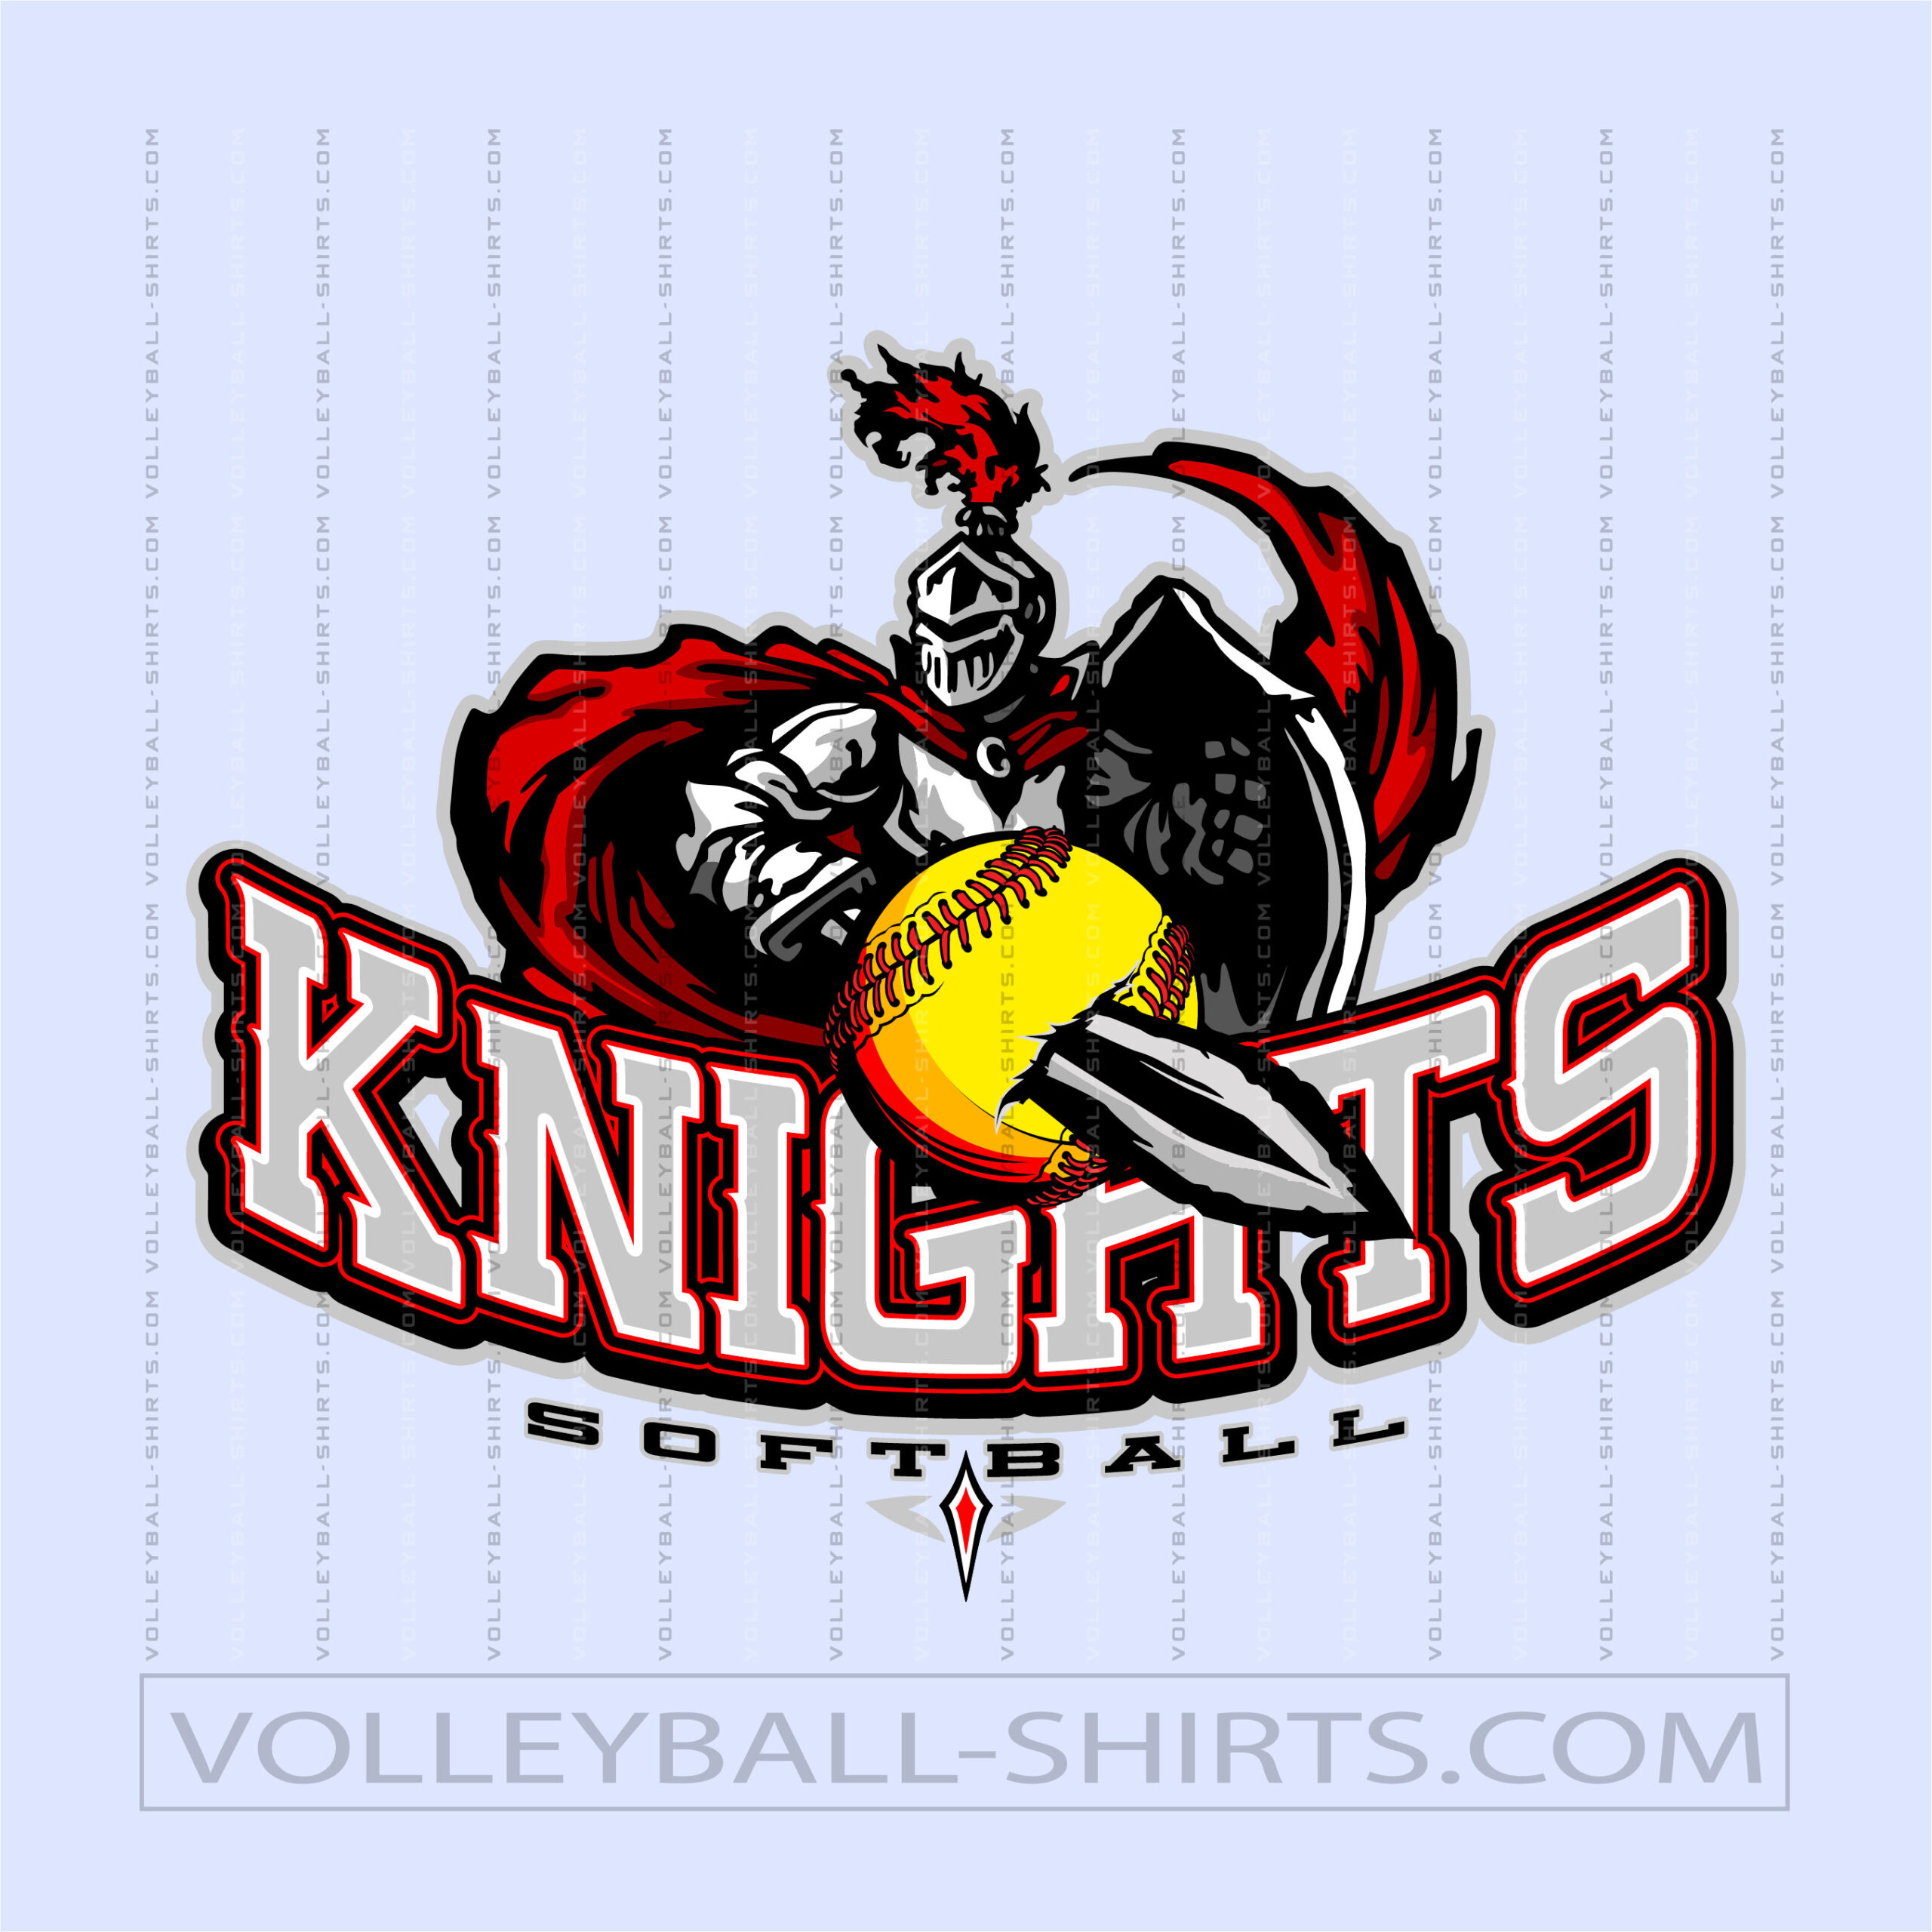 Knights Softball Pin Graphic